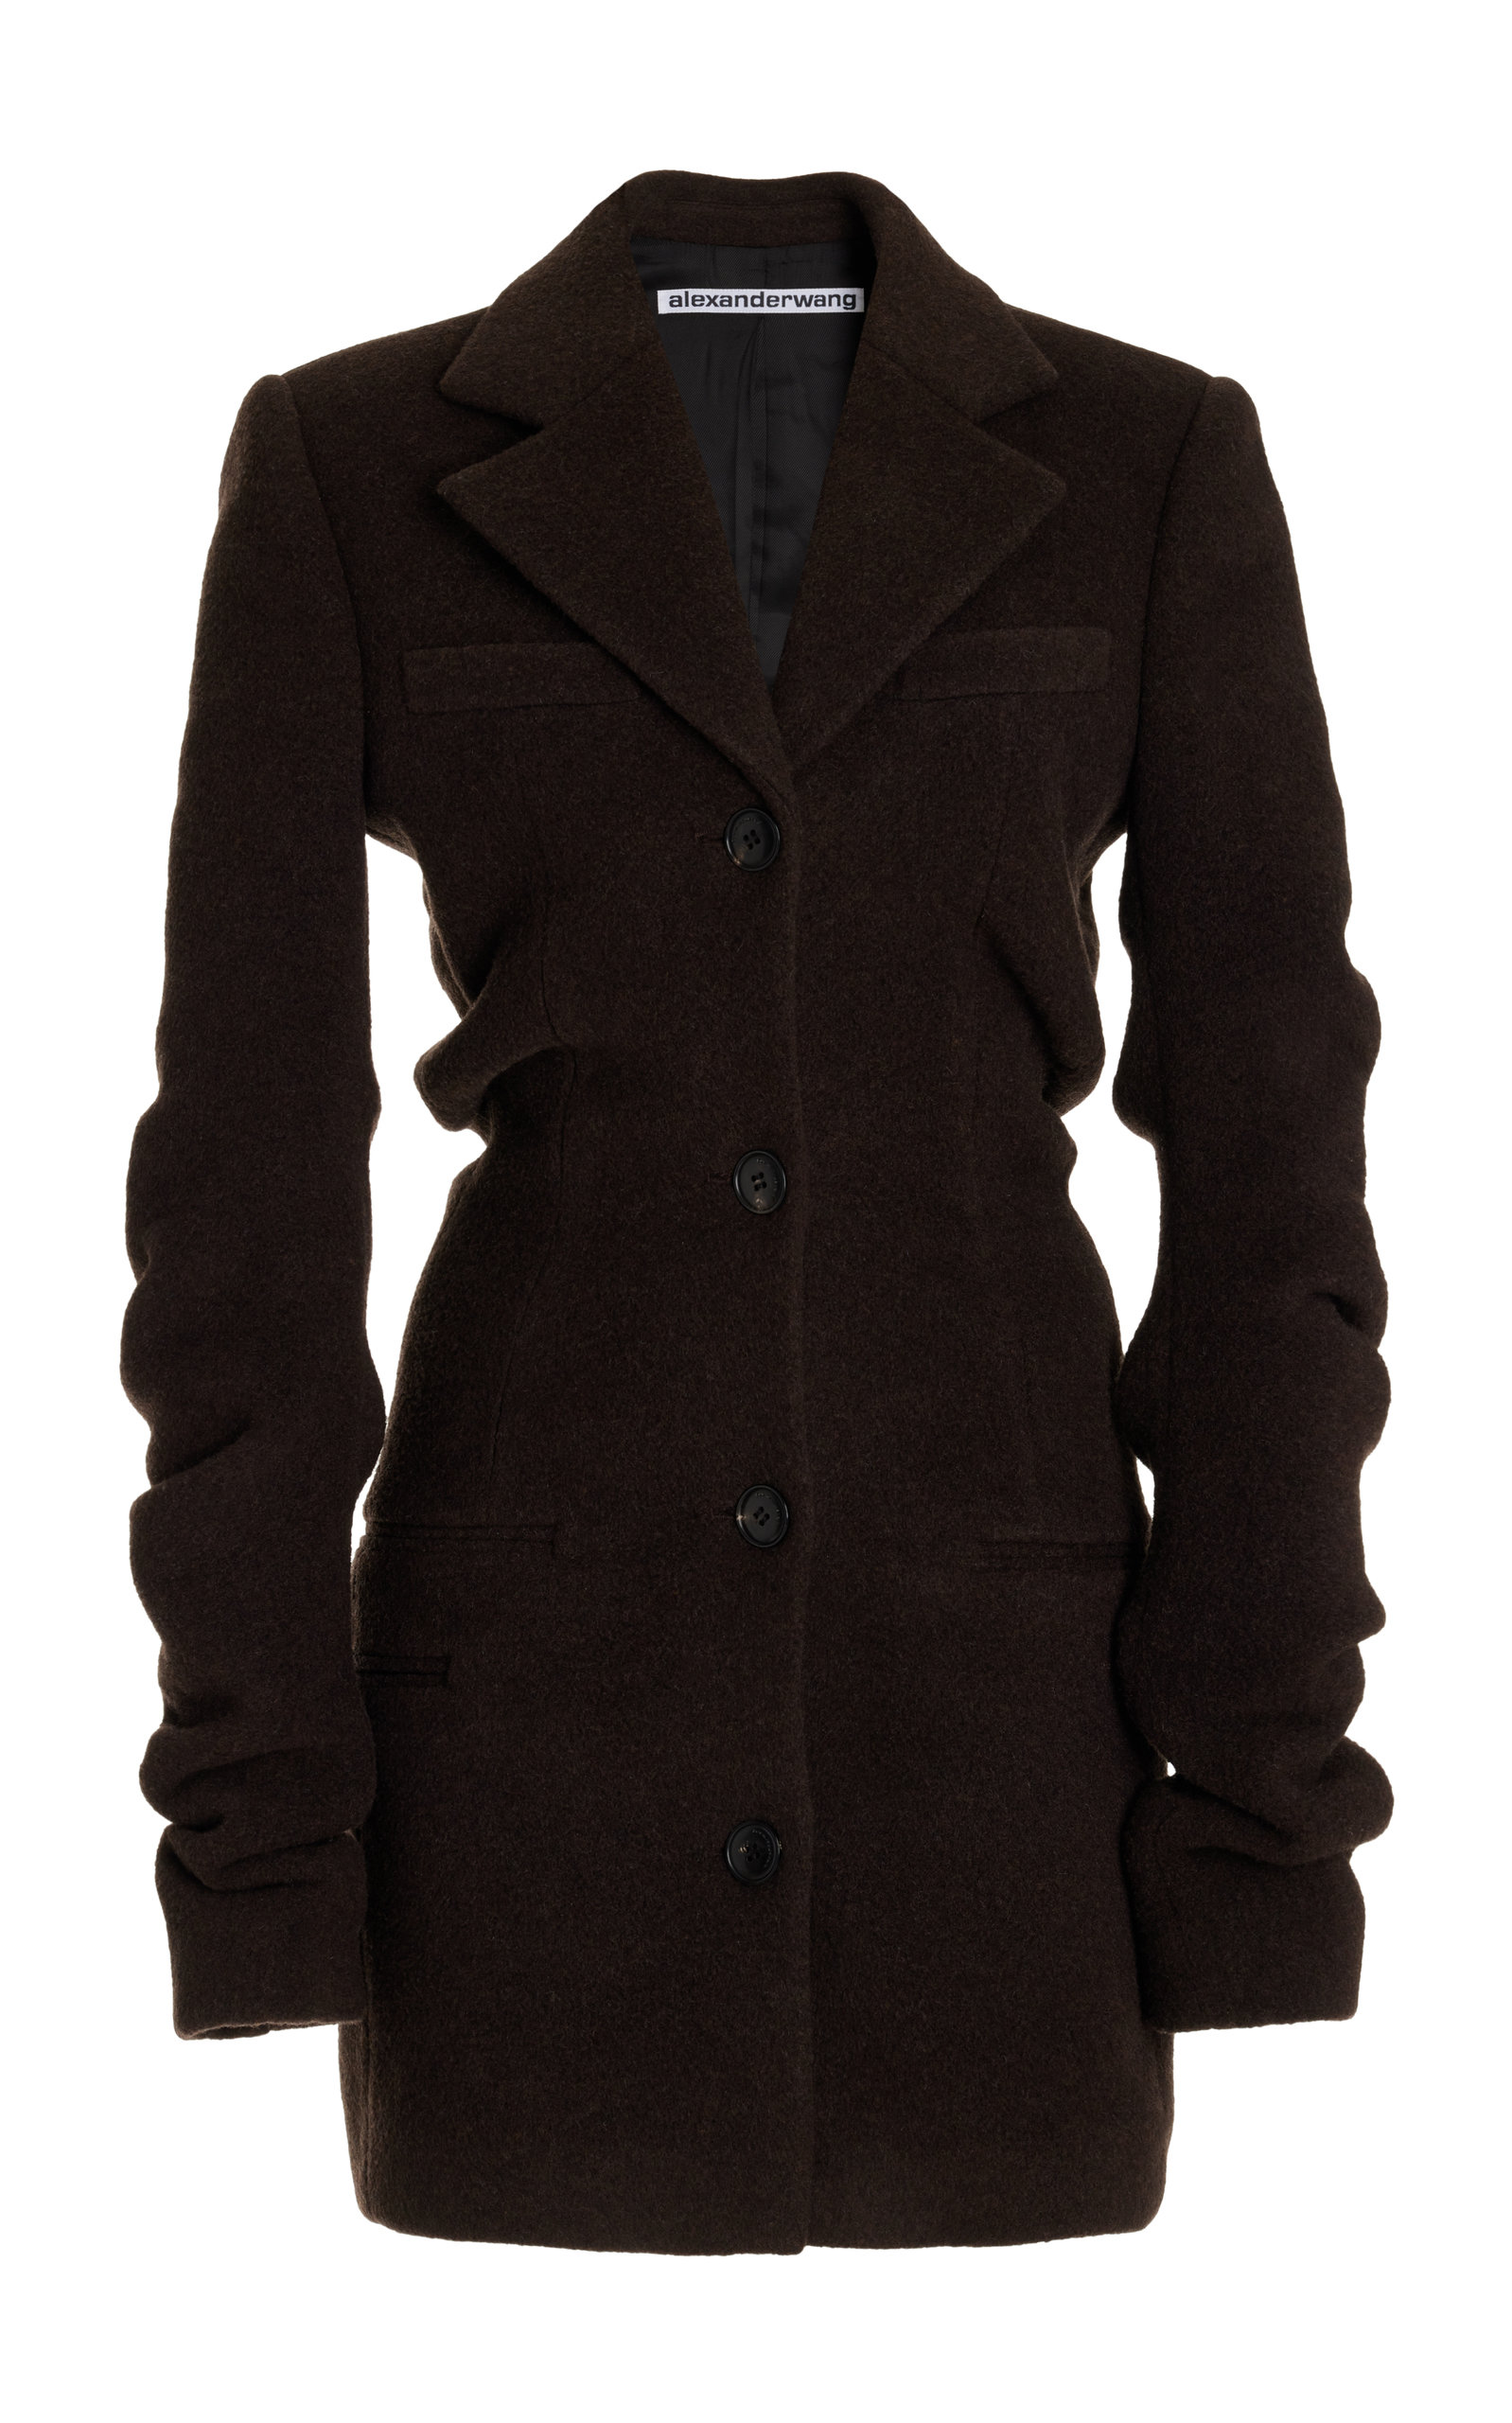 Alexander Wang - Women's Fitted Wool-Blend Jacket - Brown - US 2 - Moda Operandi